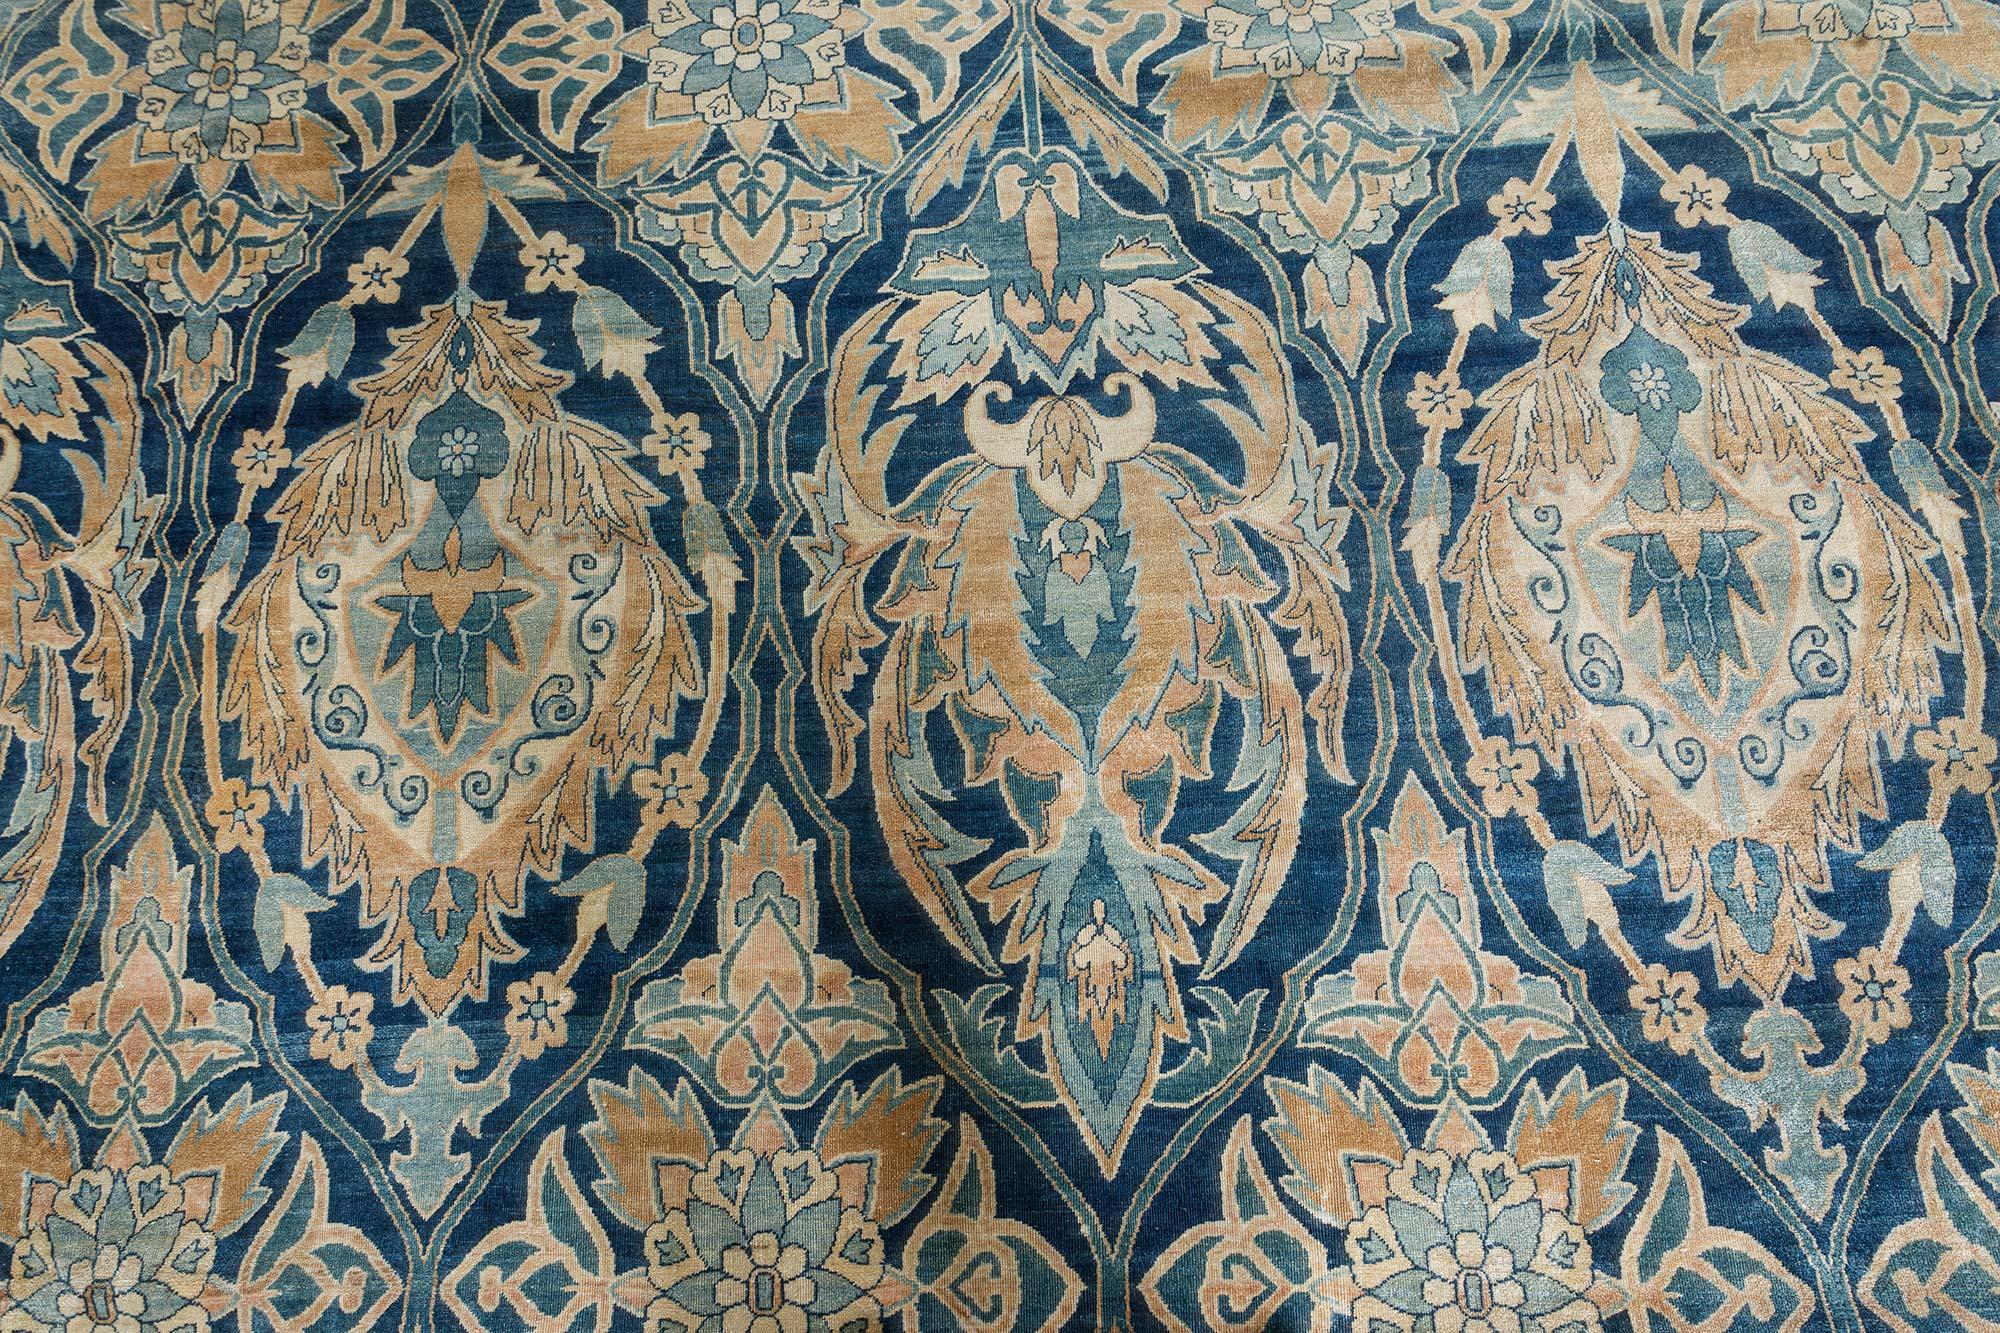 Oversized antique Persian Kirman rug
Size: 14'10